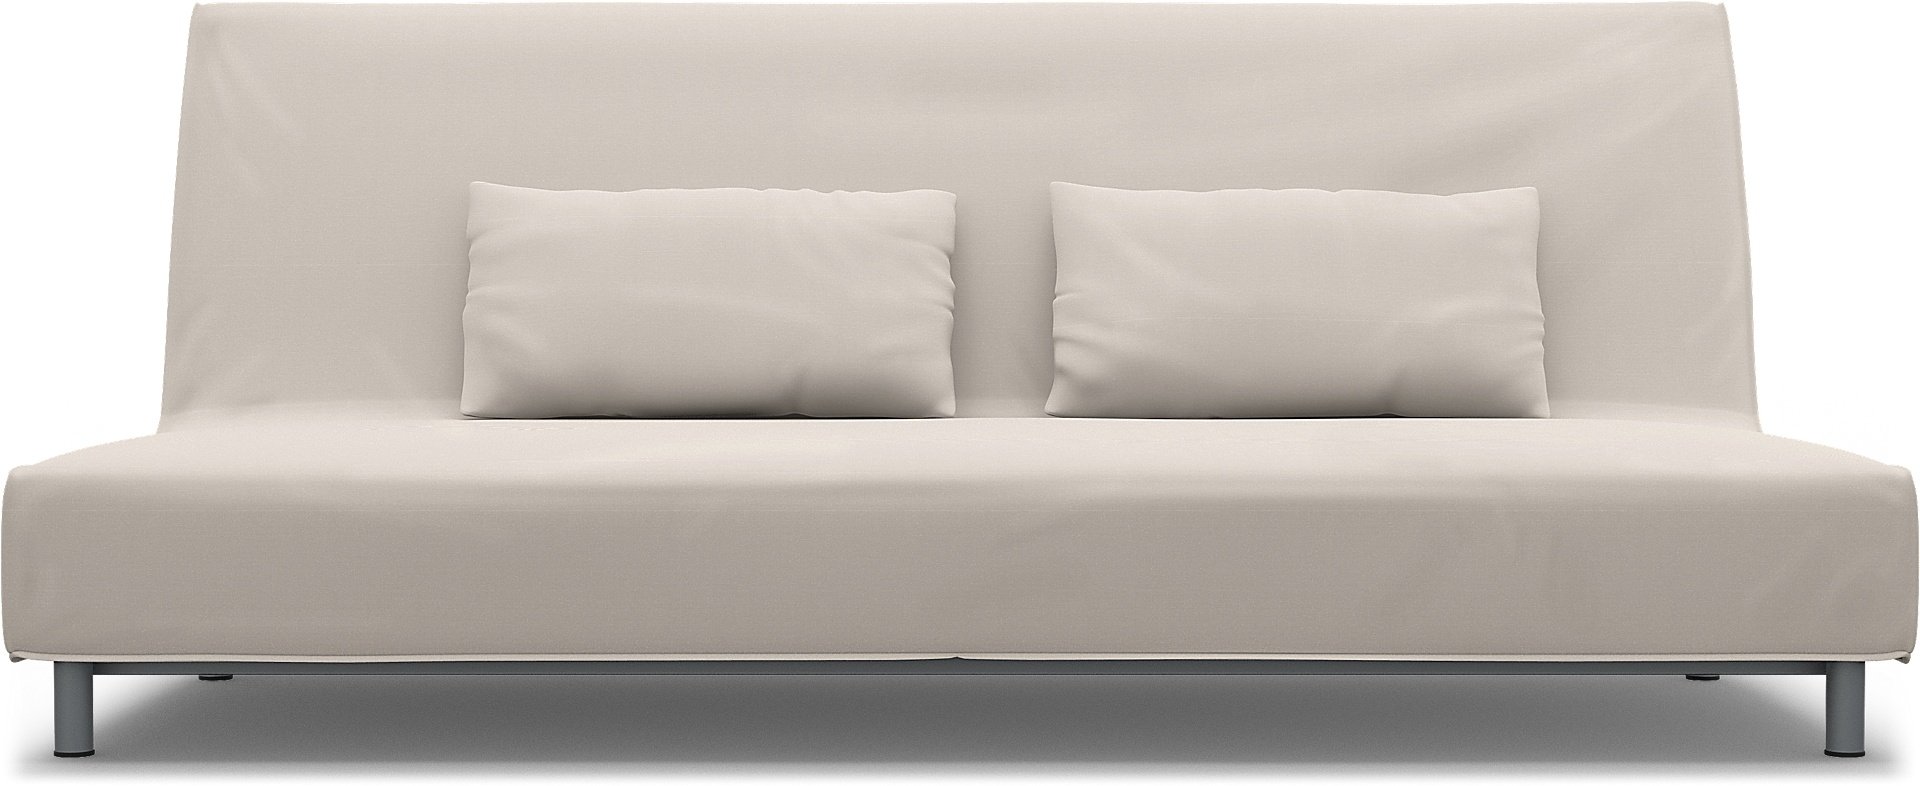 IKEA - Beddinge Sofa Bed Cover, Soft White, Cotton - Bemz